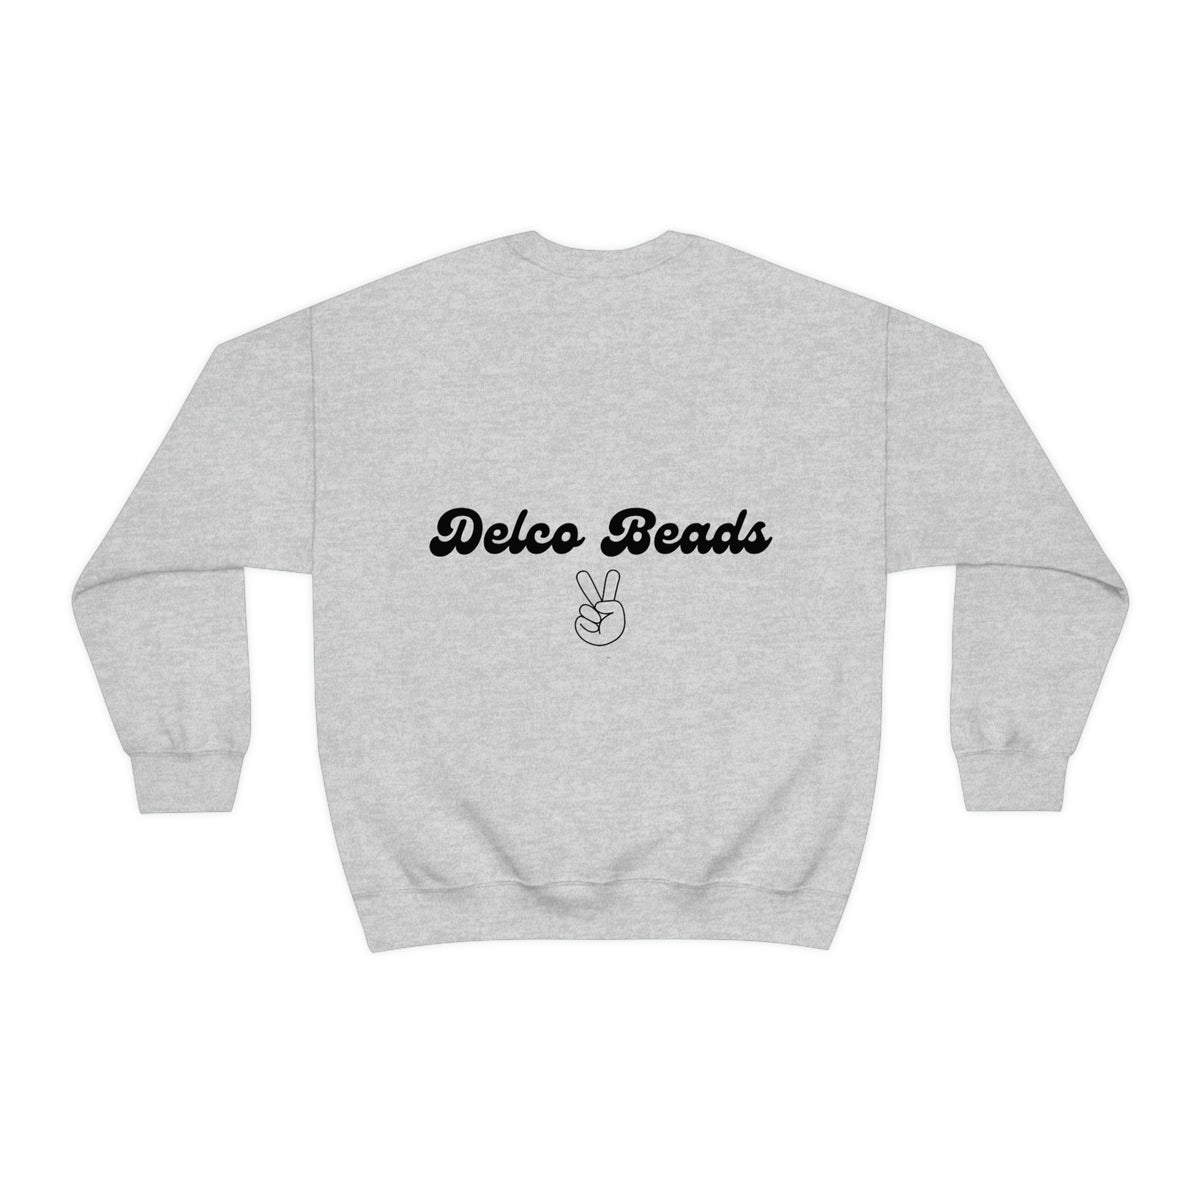 Delco Beads Groovy Crewneck, Delco Bead Pullover, Delaware County Small Business Sweatshirt